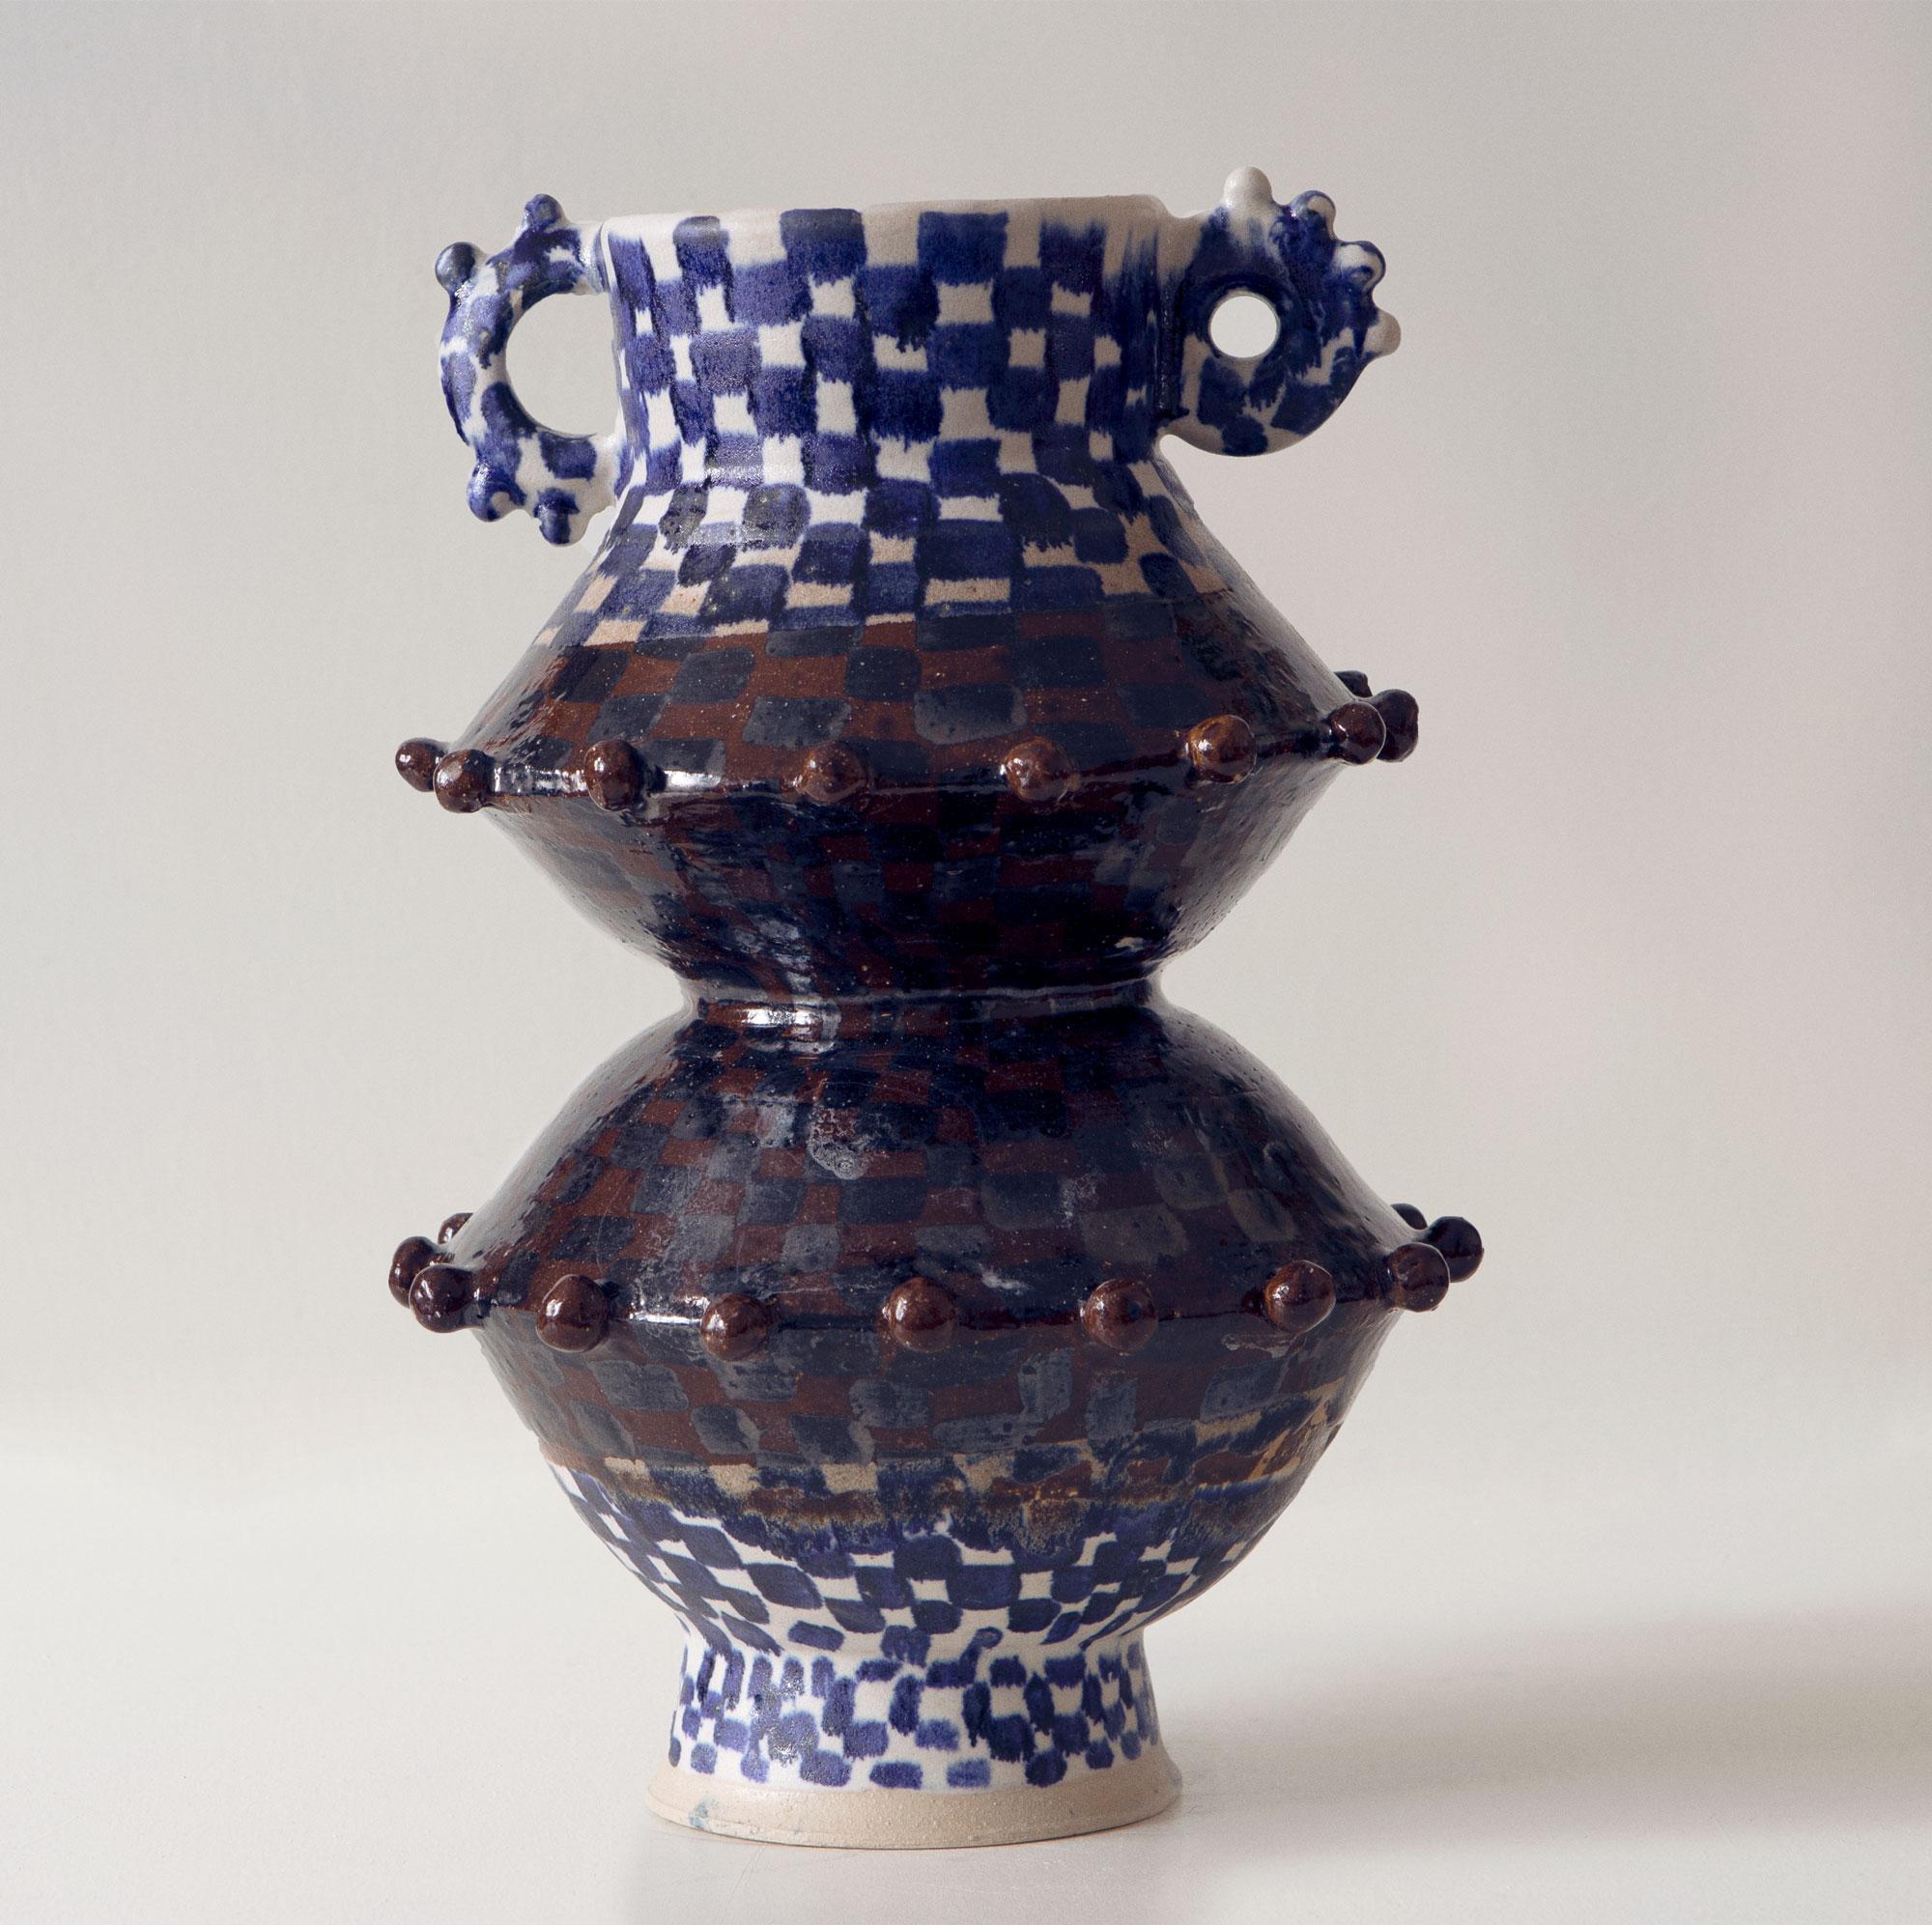 Bead Totem Ear Vase - Modern Abstract Ornamental Ceramic Sculptural Vase - Sculpture by Dea Domus